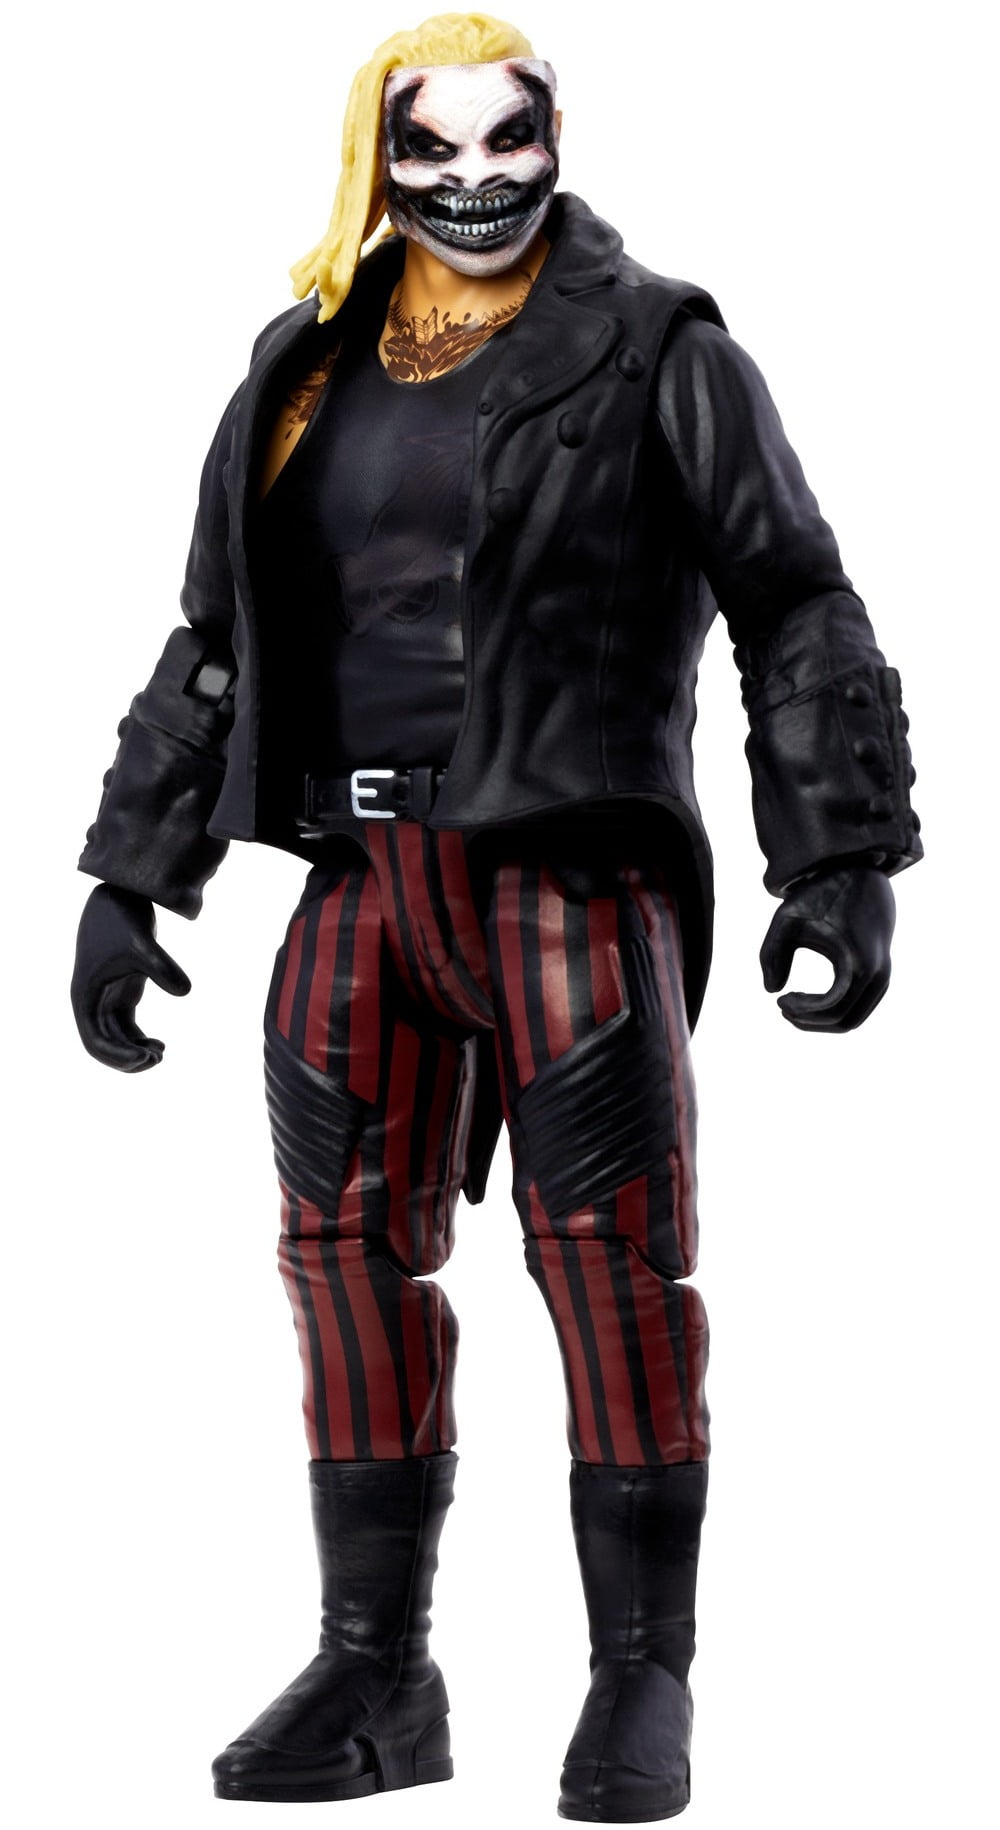 Custom WWE Bray Wyatt Fiend Universal Belt for Retro Hasbro figures not included 